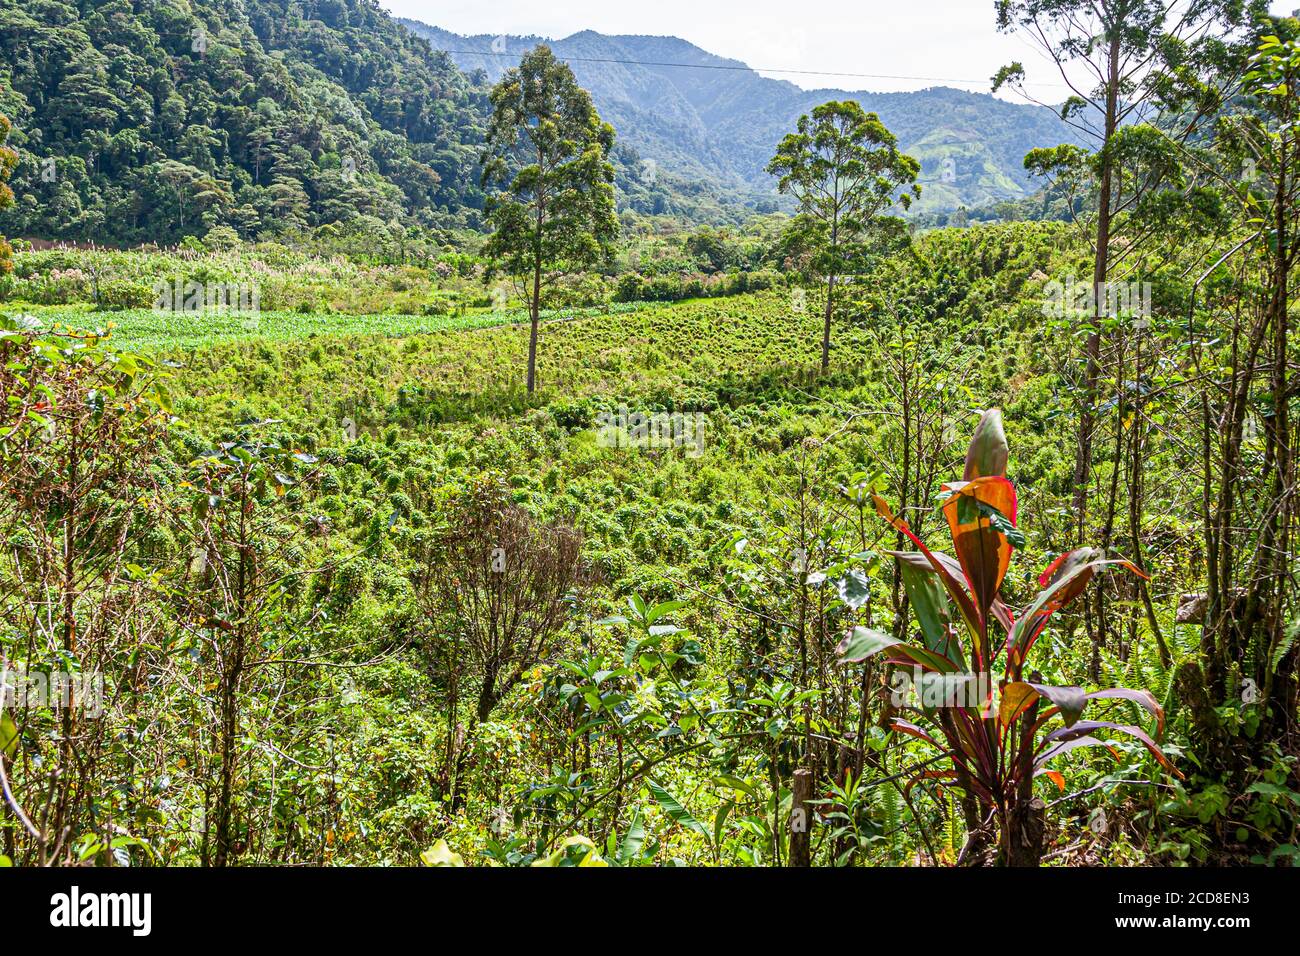 Coffee plantation of Costa Rica Stock Photo